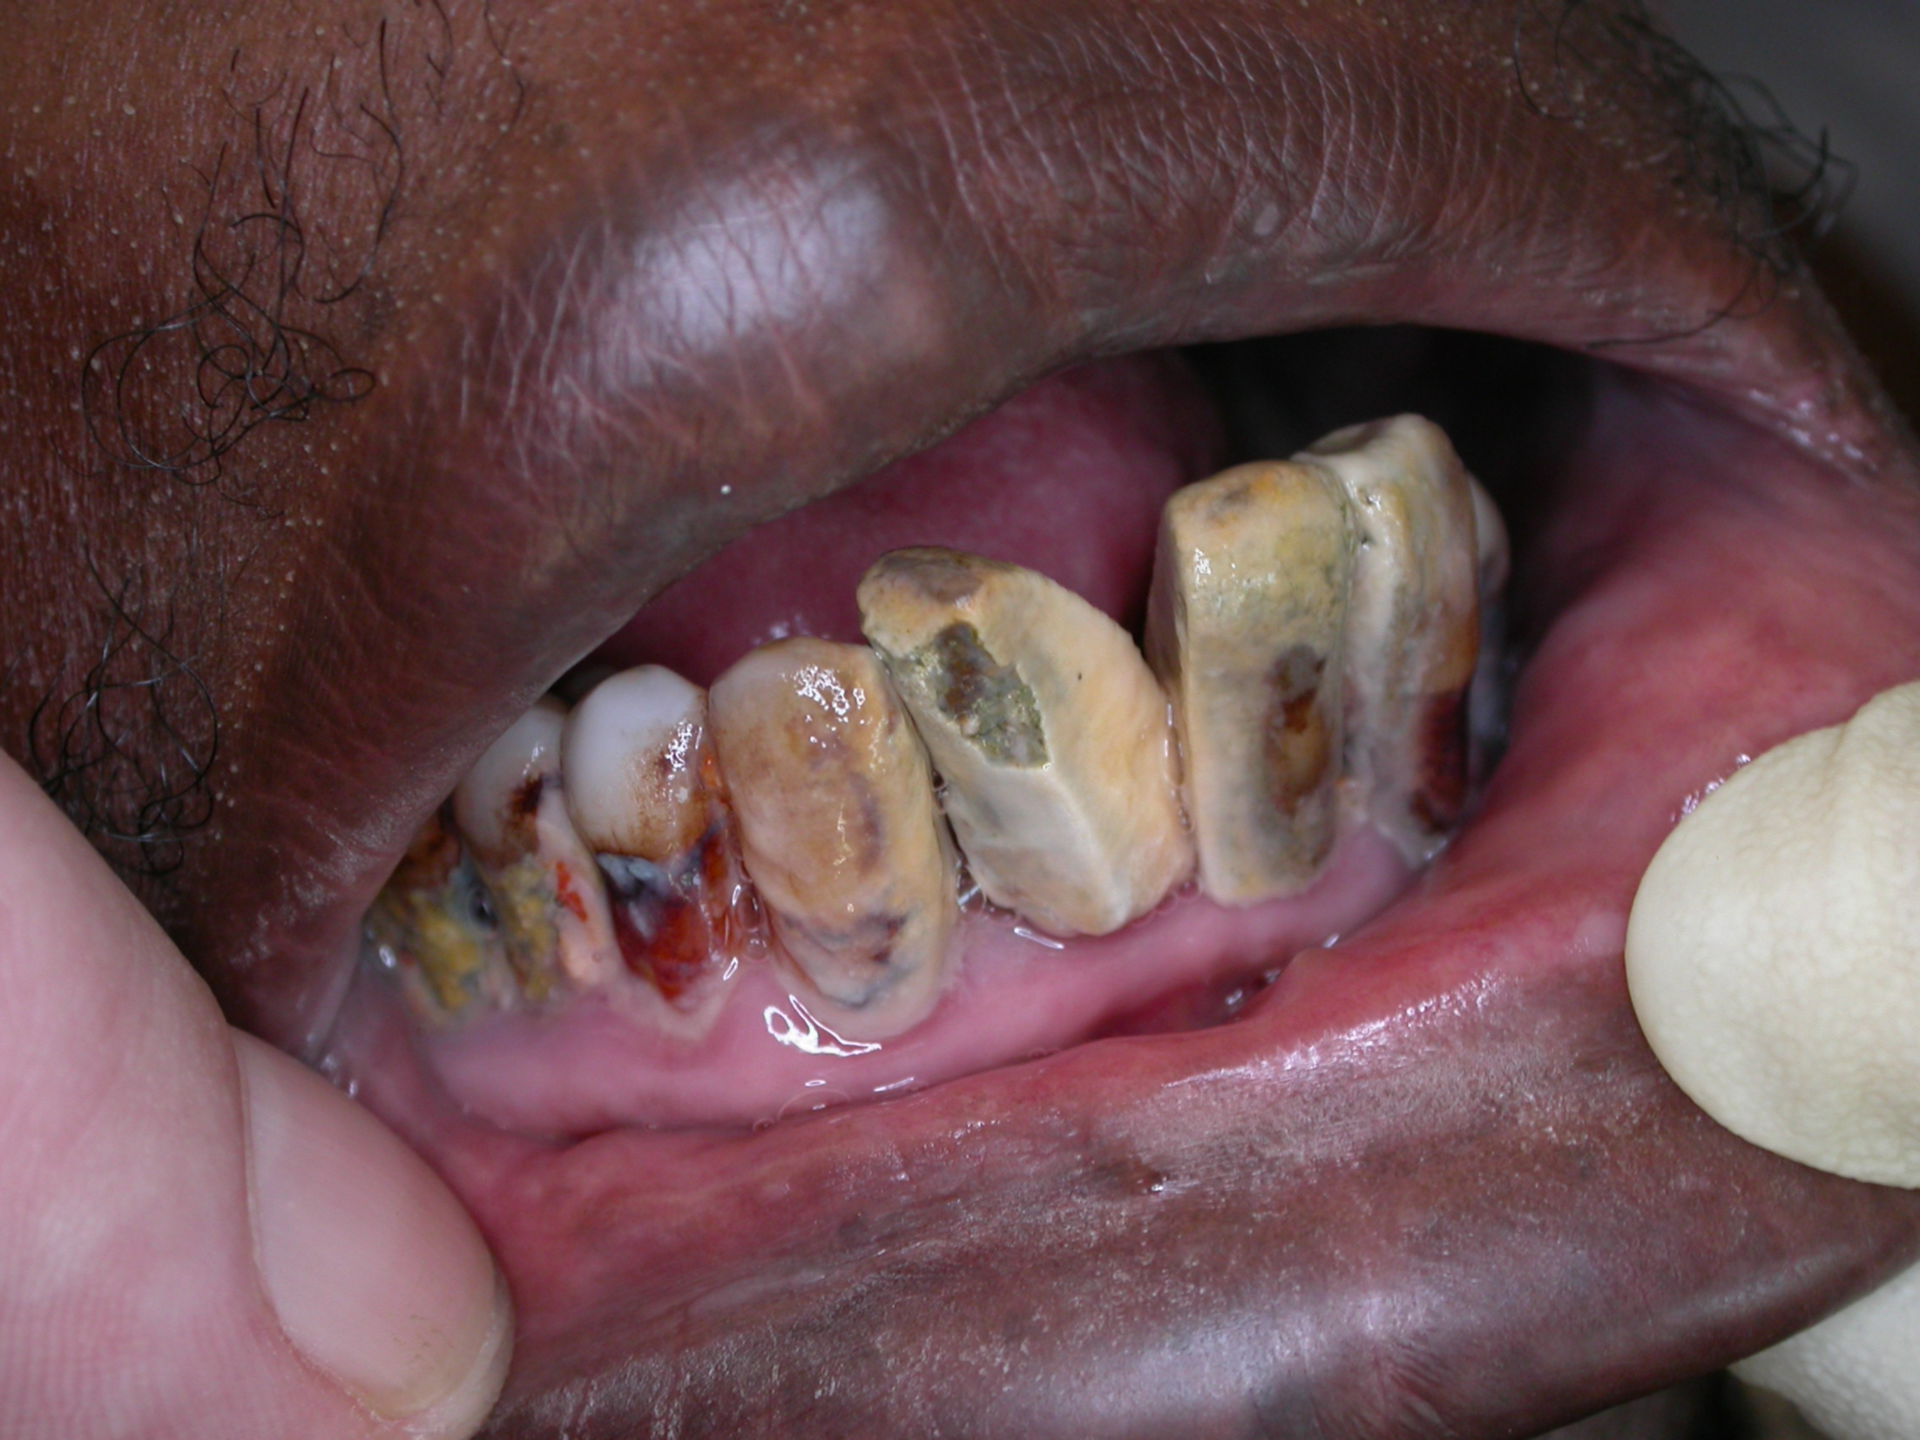 Neglected teeth